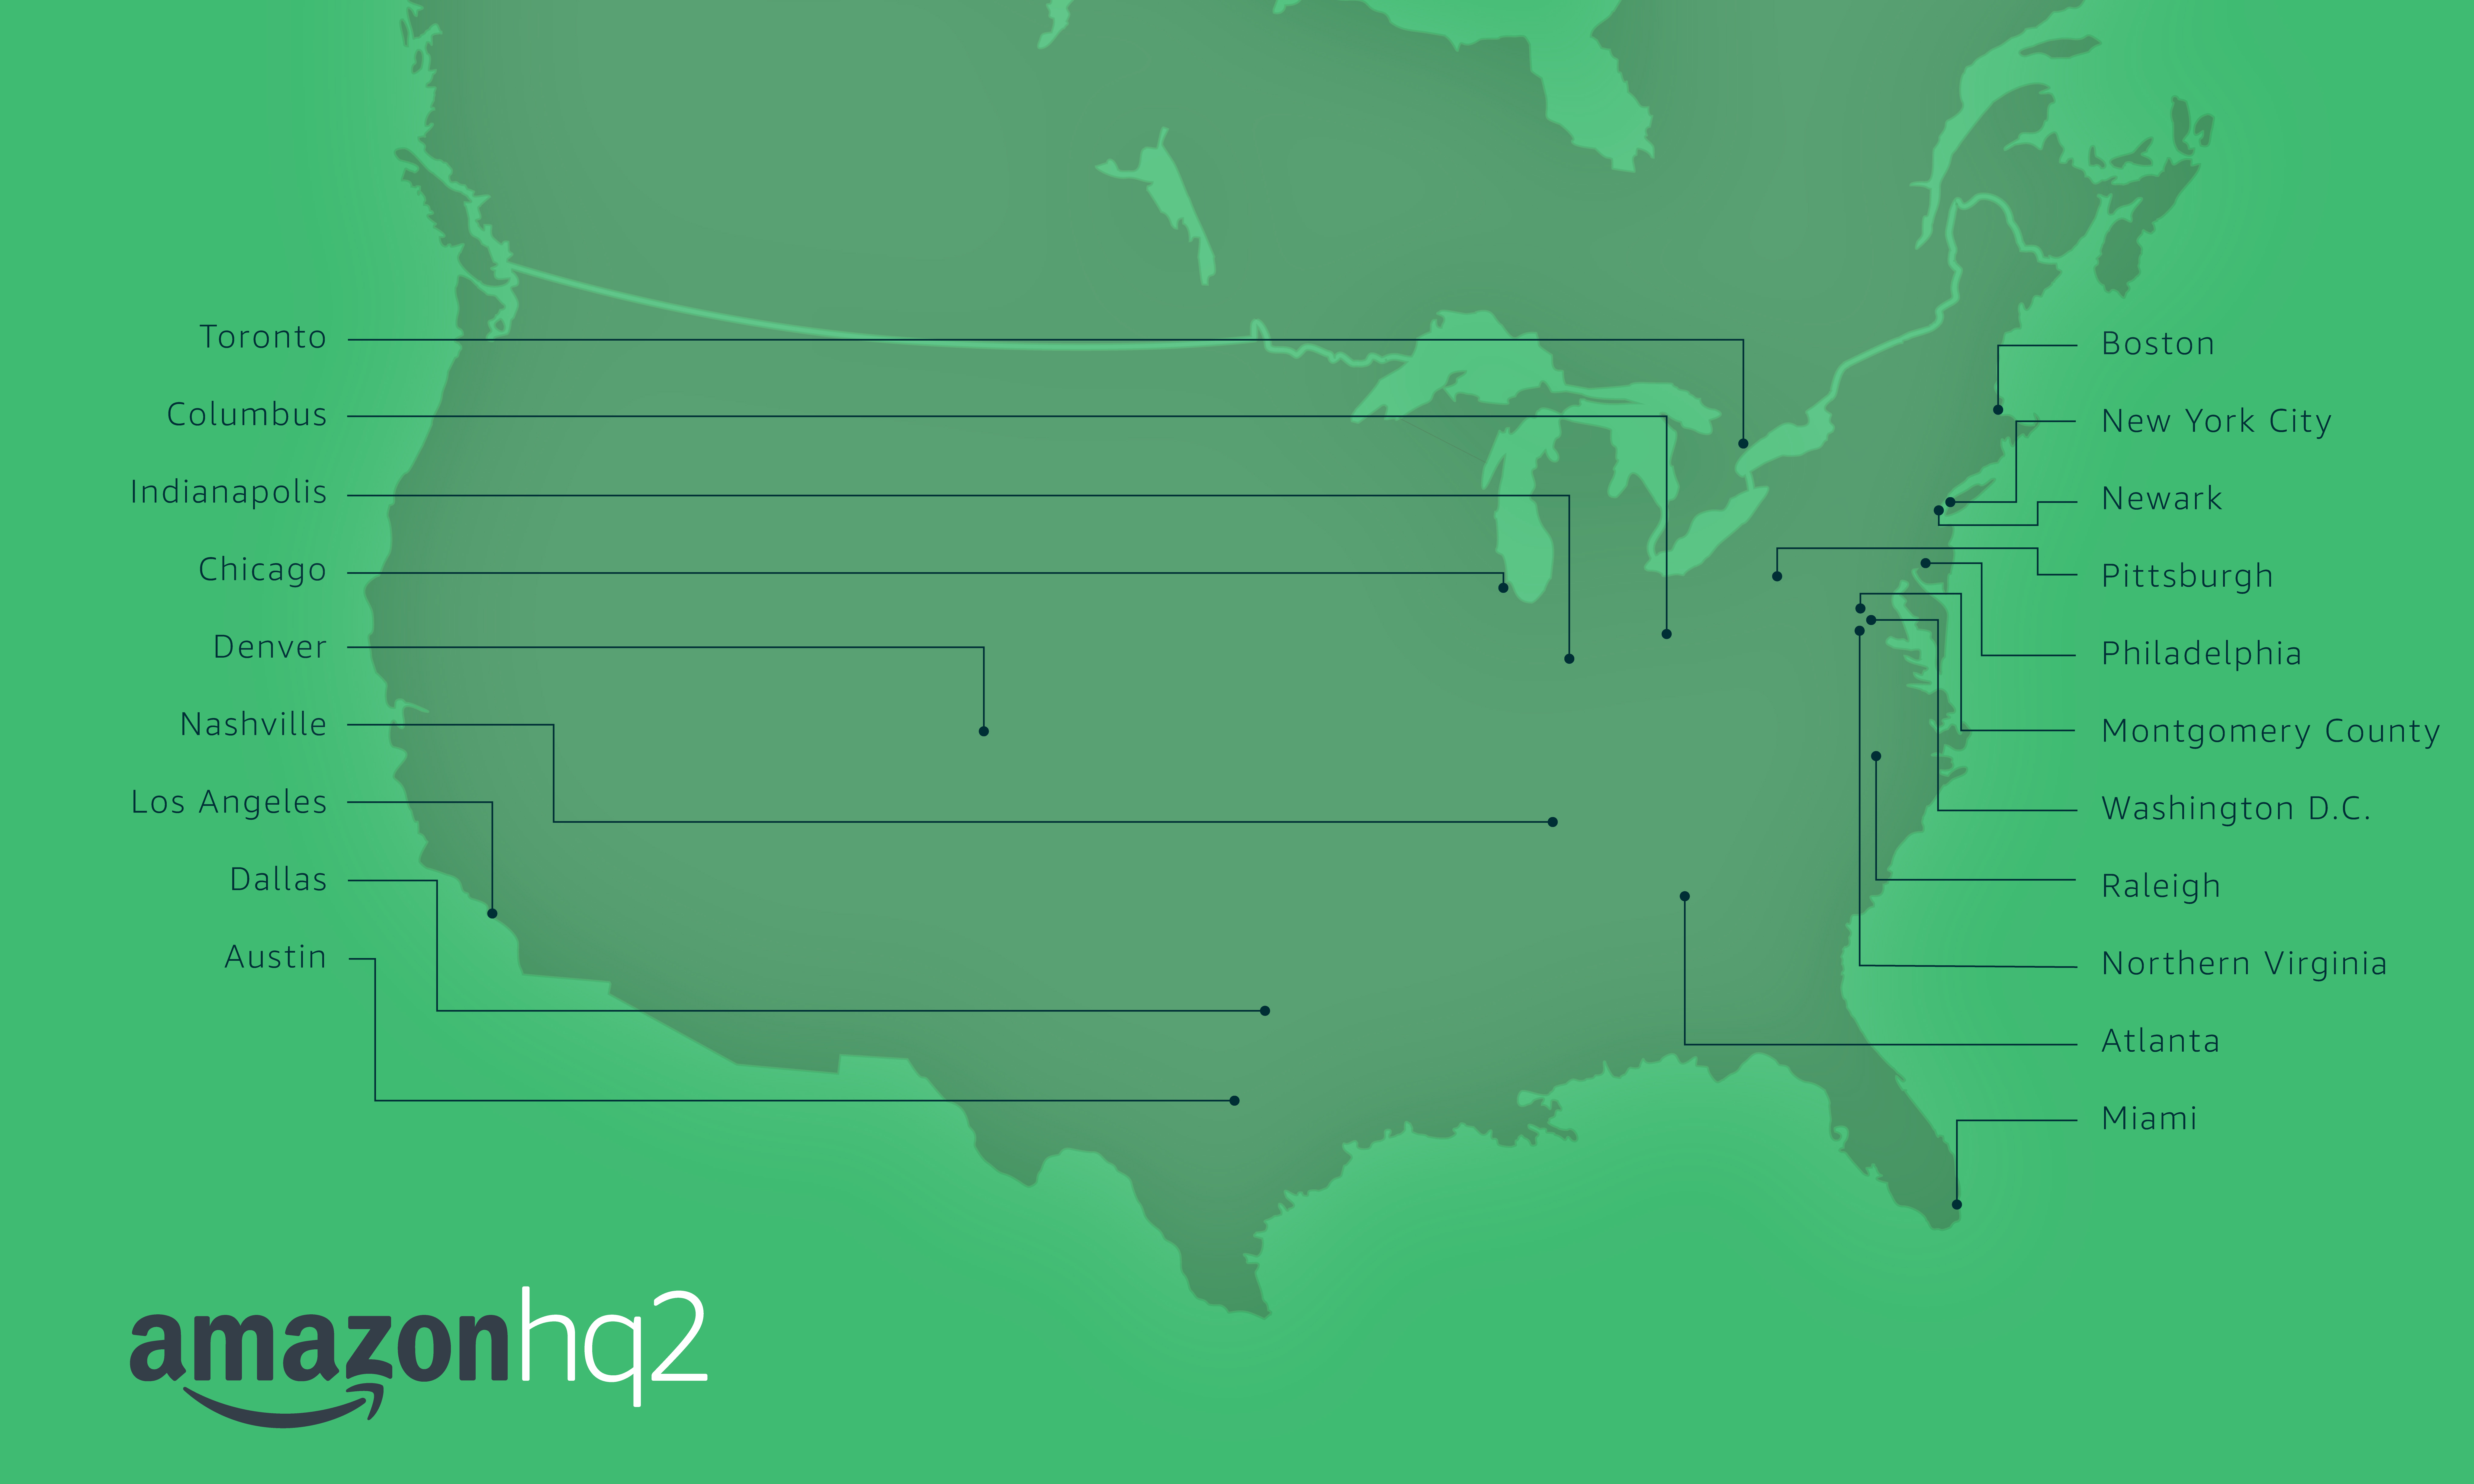 Amazon HQ2 candidate cities. Credit: Amazon.com